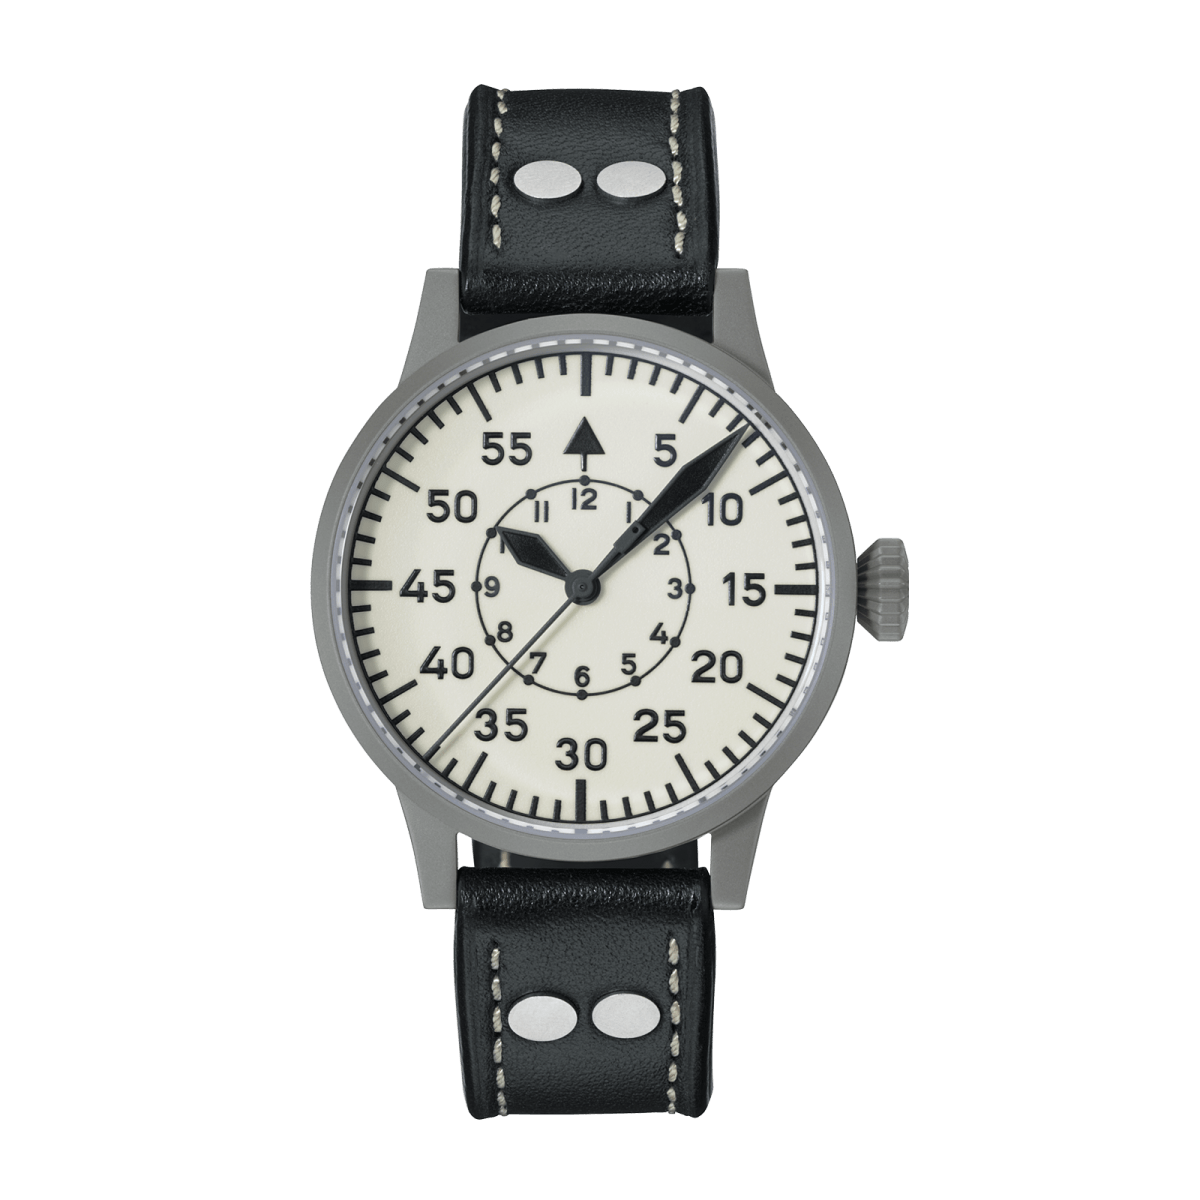 Laco 862154 Wien 39 Pilot Watch Original Automatic Lume Dial